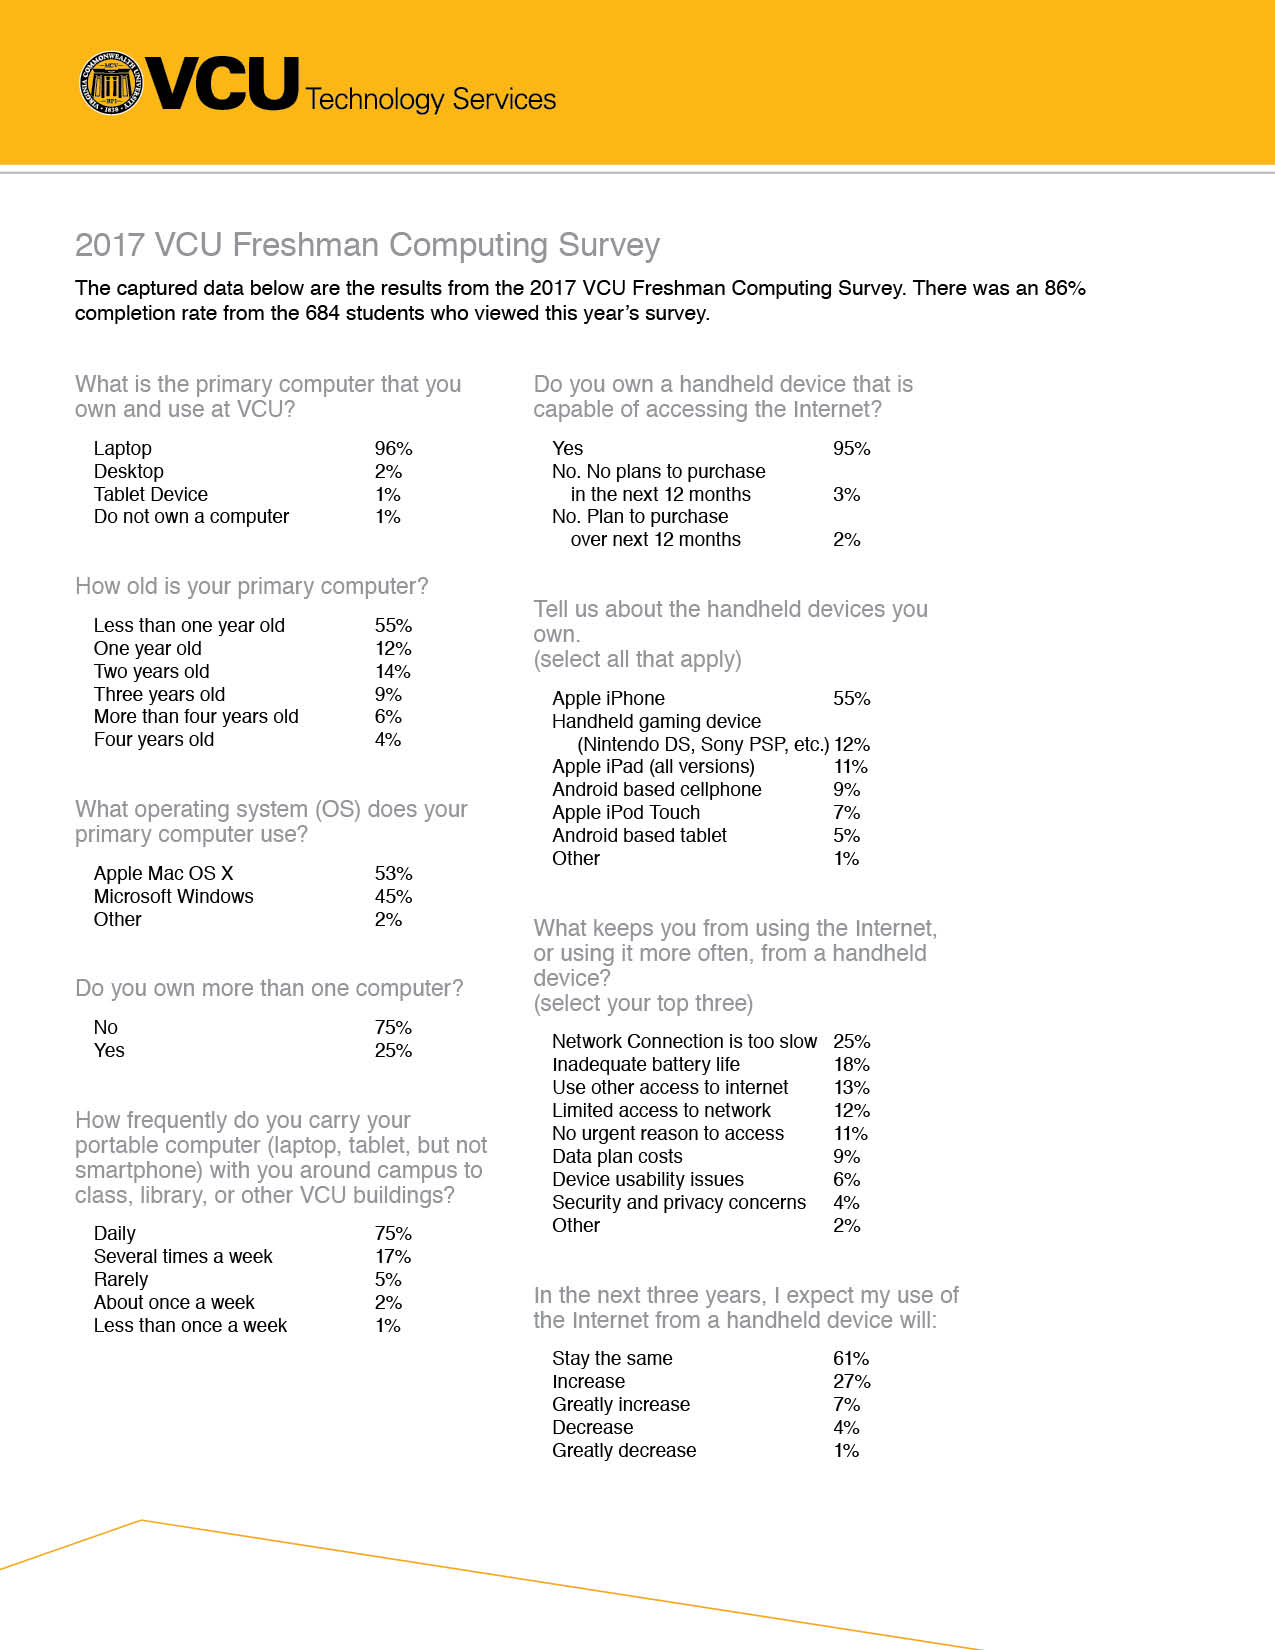 2017 Freshman Computing Survey page 1